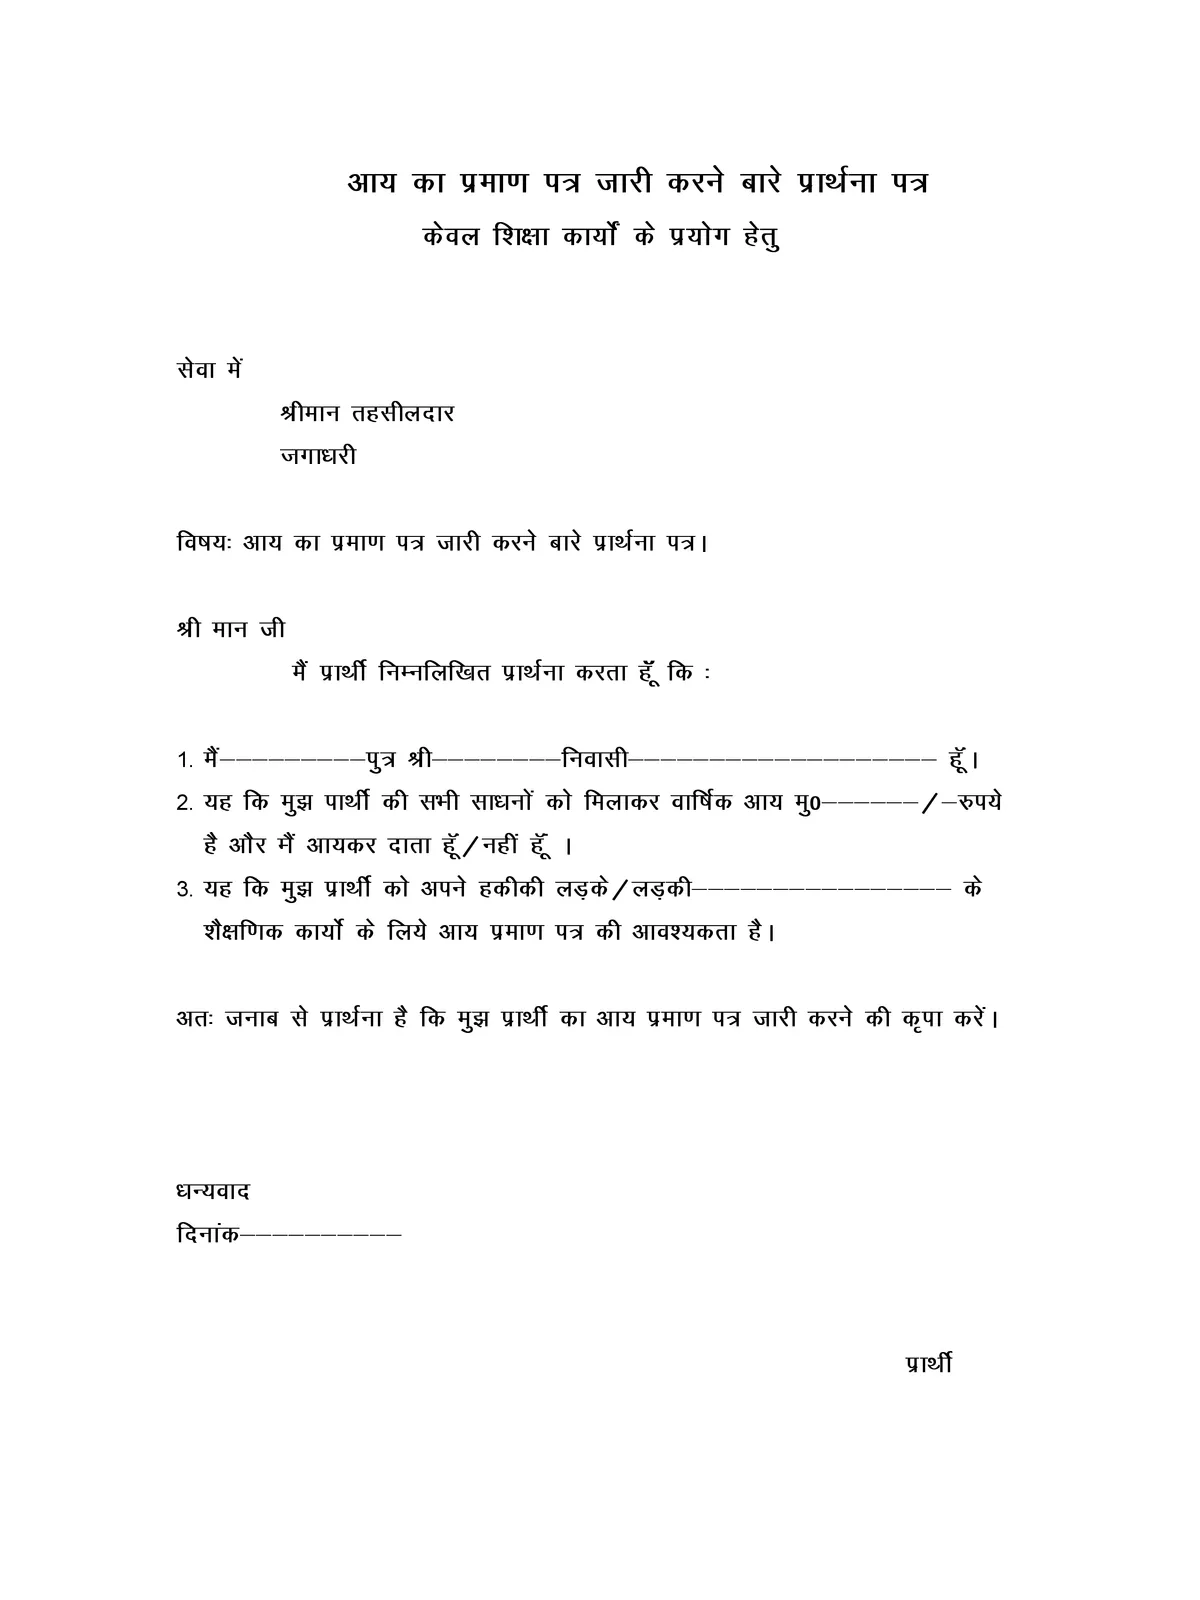 Haryana Income Certificate Form